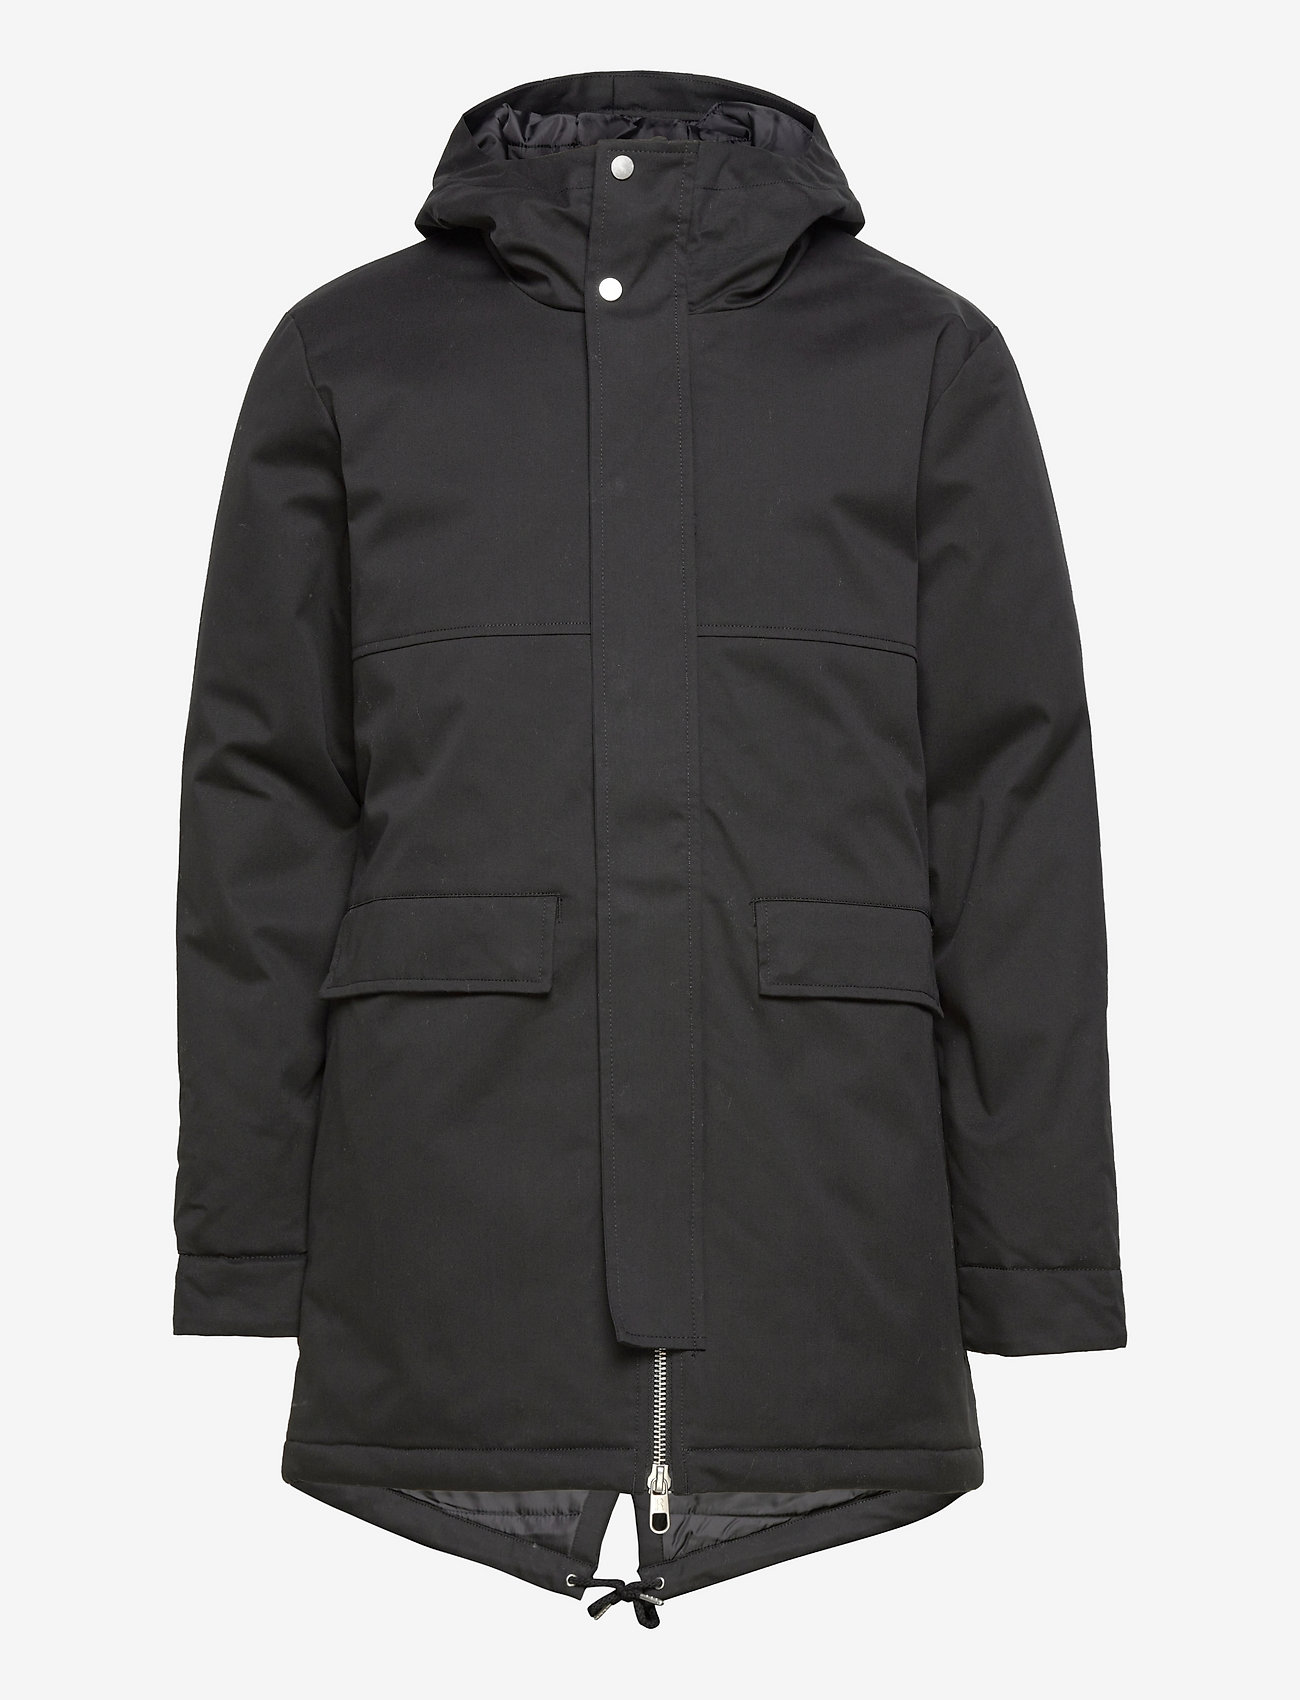 Revolution - Fishtail parka - winter jackets - black - 0